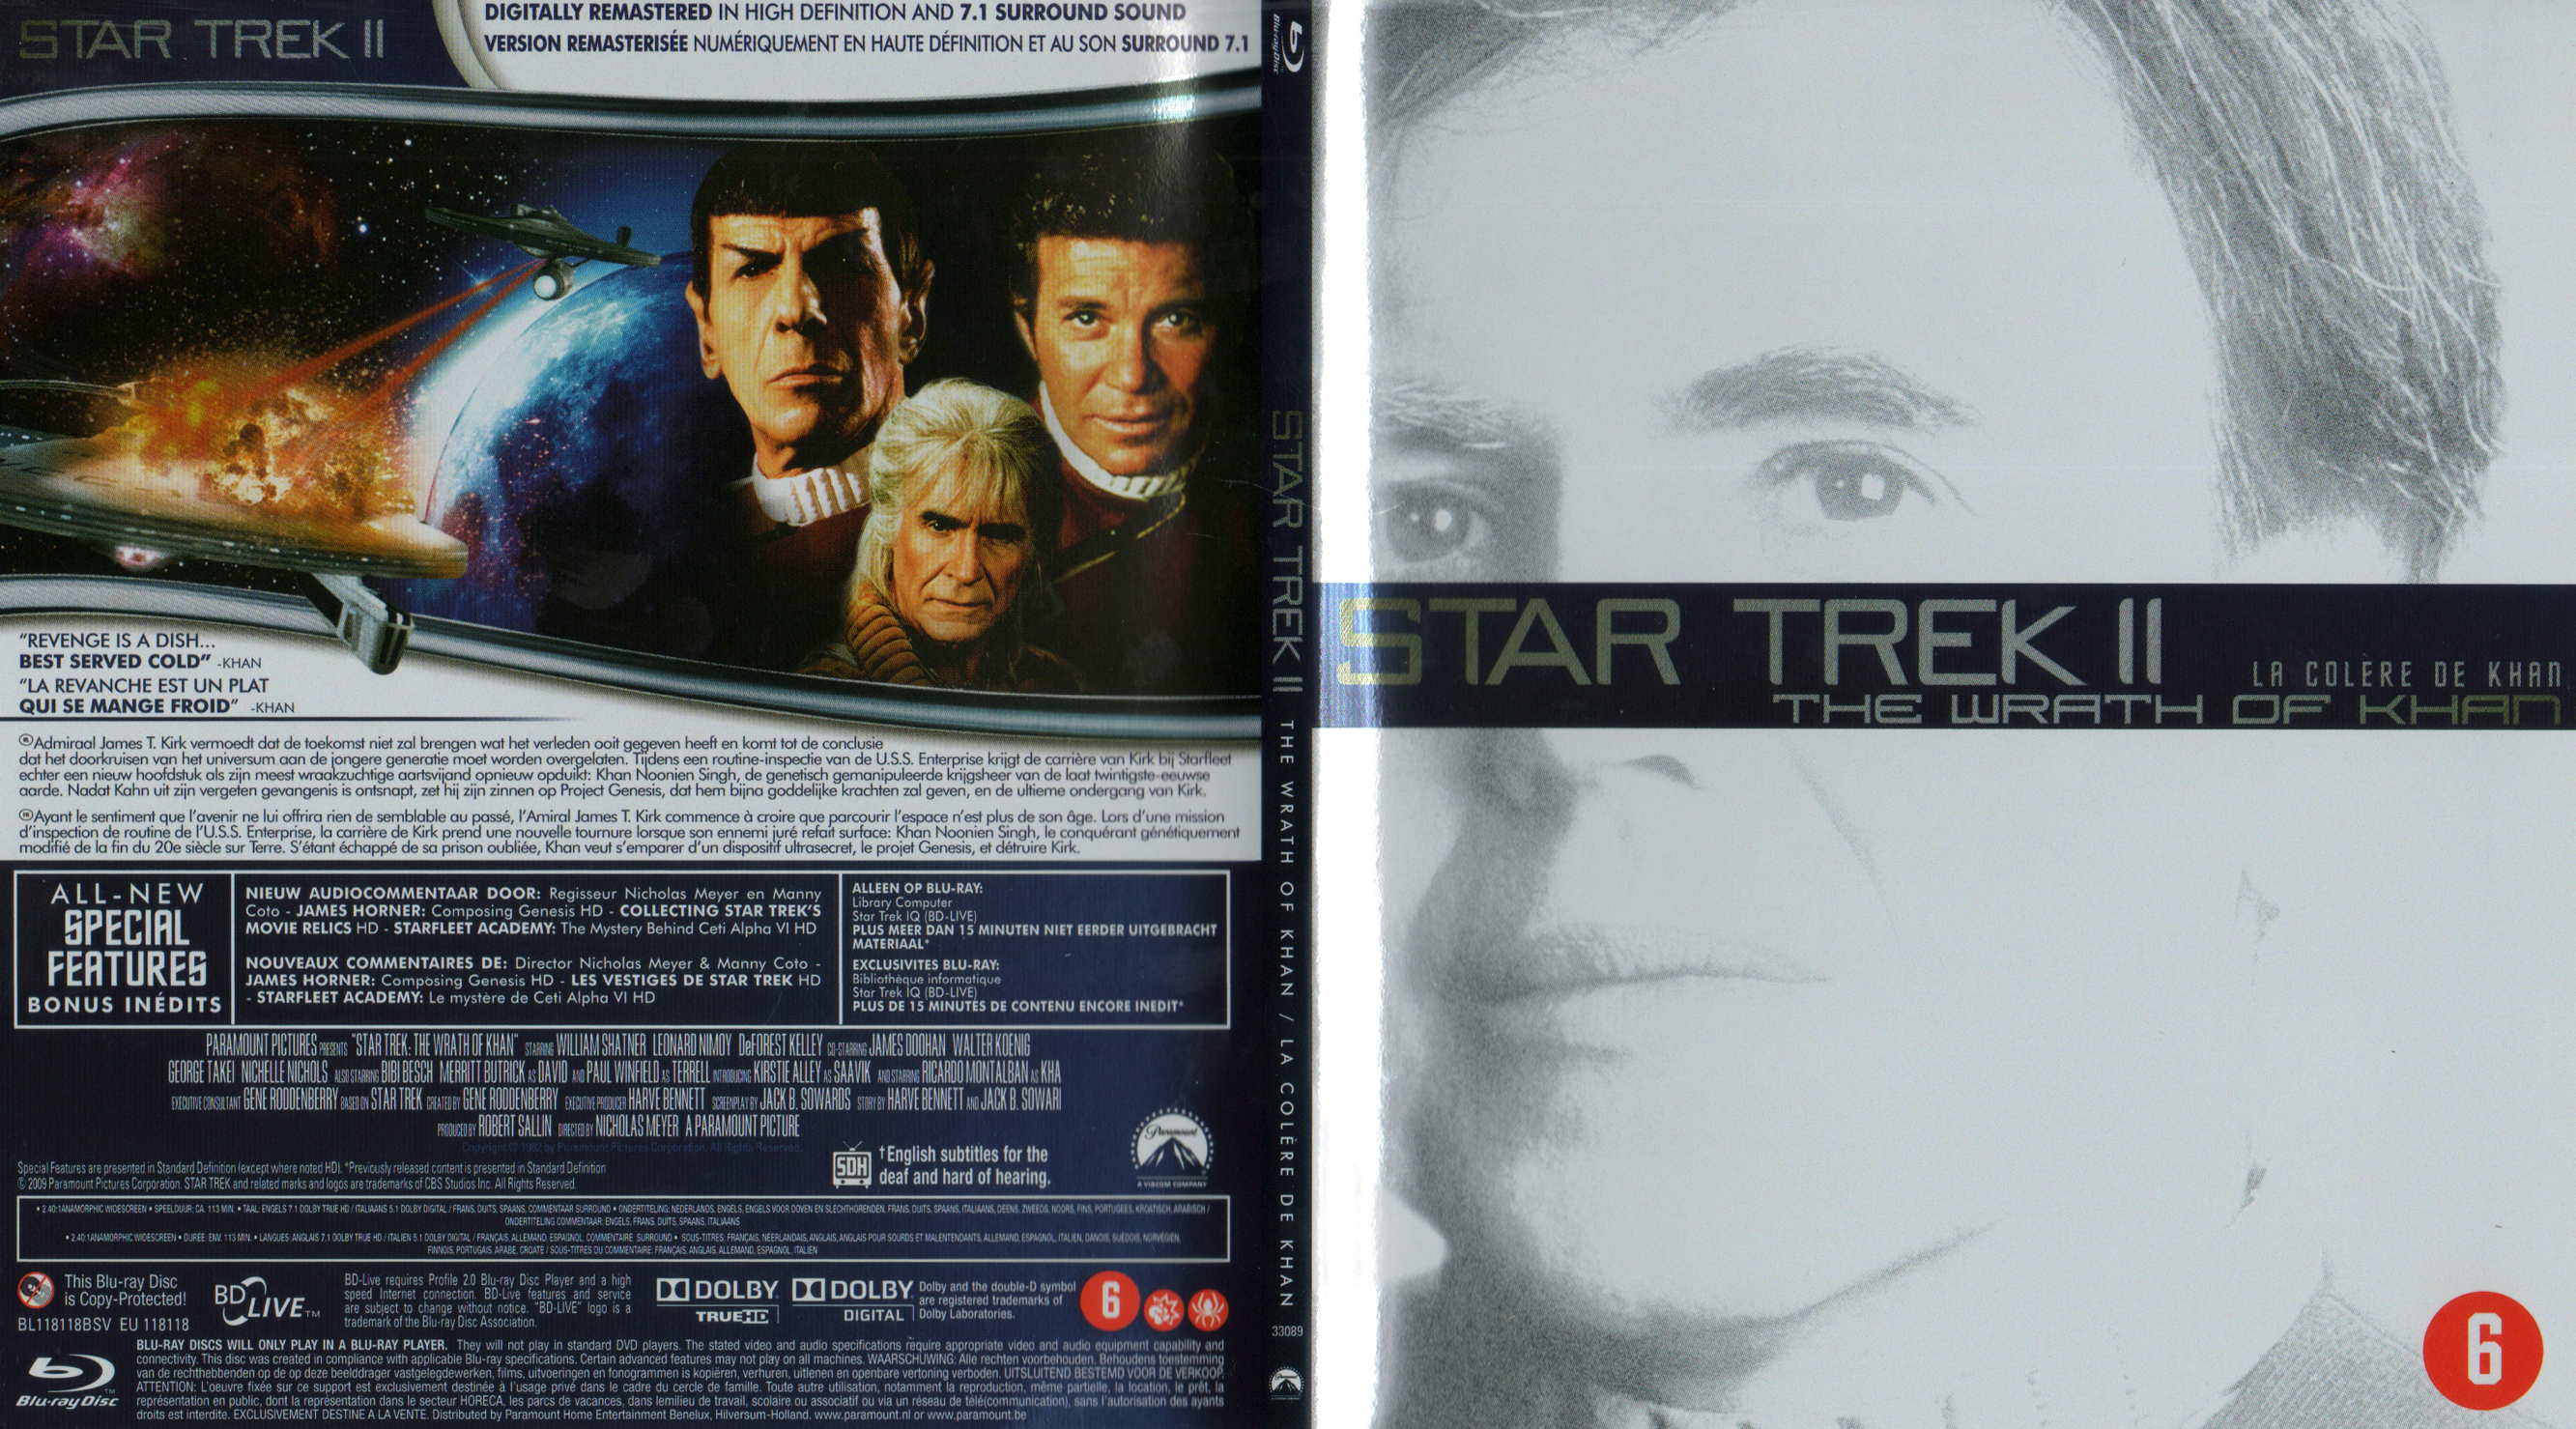 Jaquette DVD Star Trek 2 la colre de Khan (BLU-RAY) v2